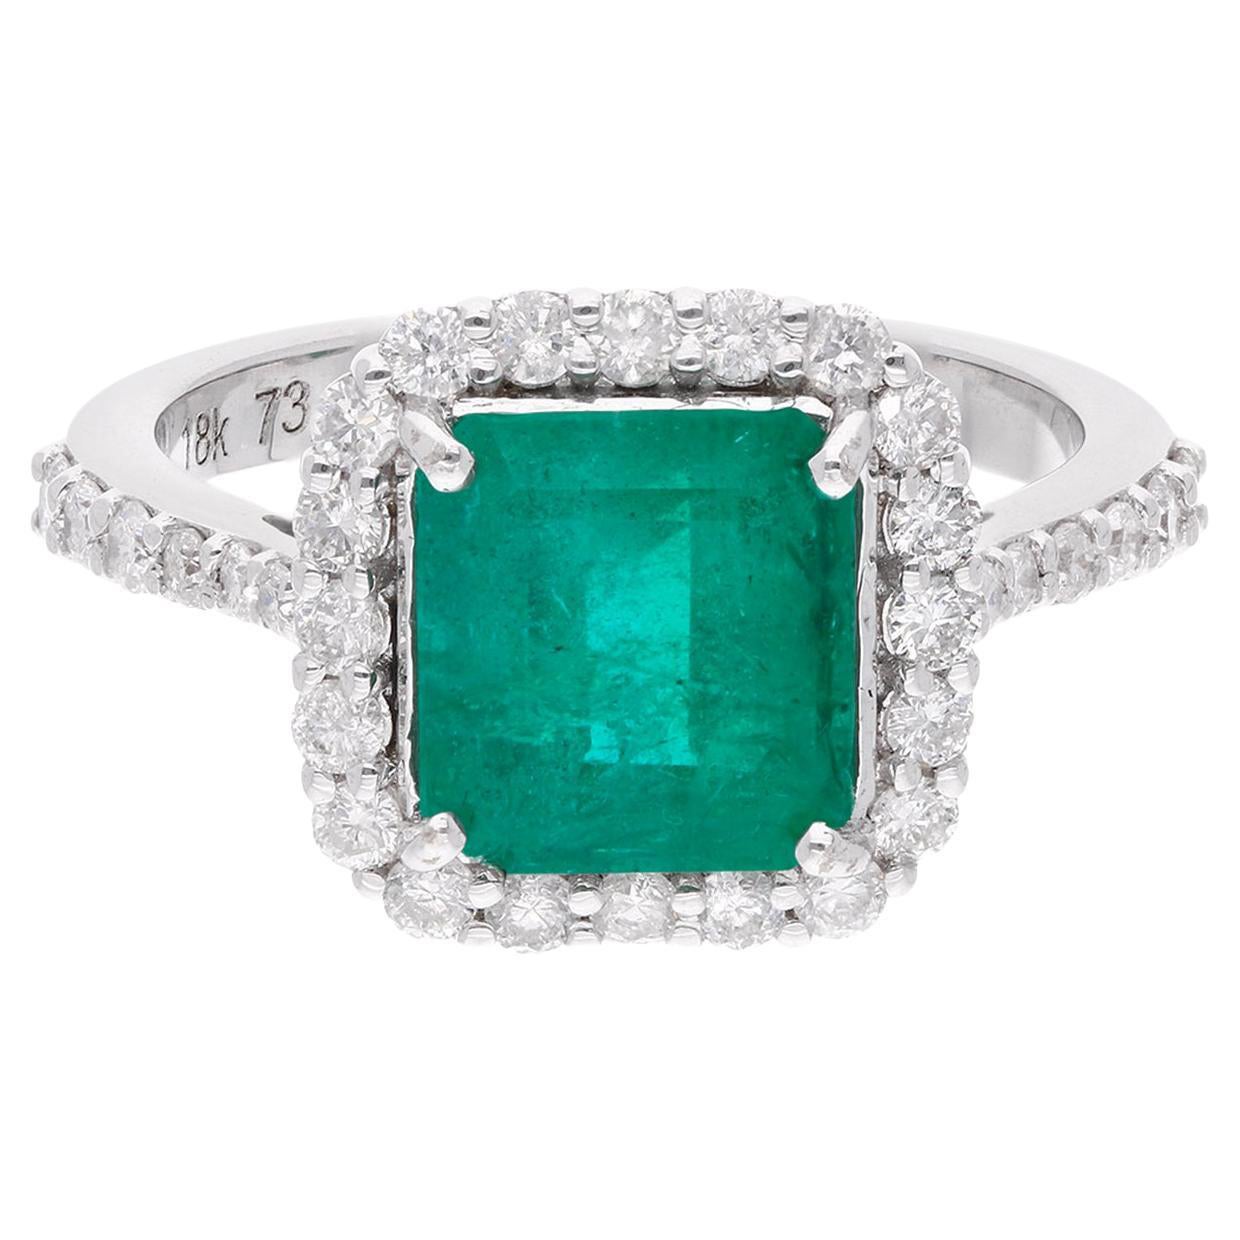 Zambian Emerald Gemstone Cocktail Ring Diamond 18 Kt White Gold Handmade Jewelry